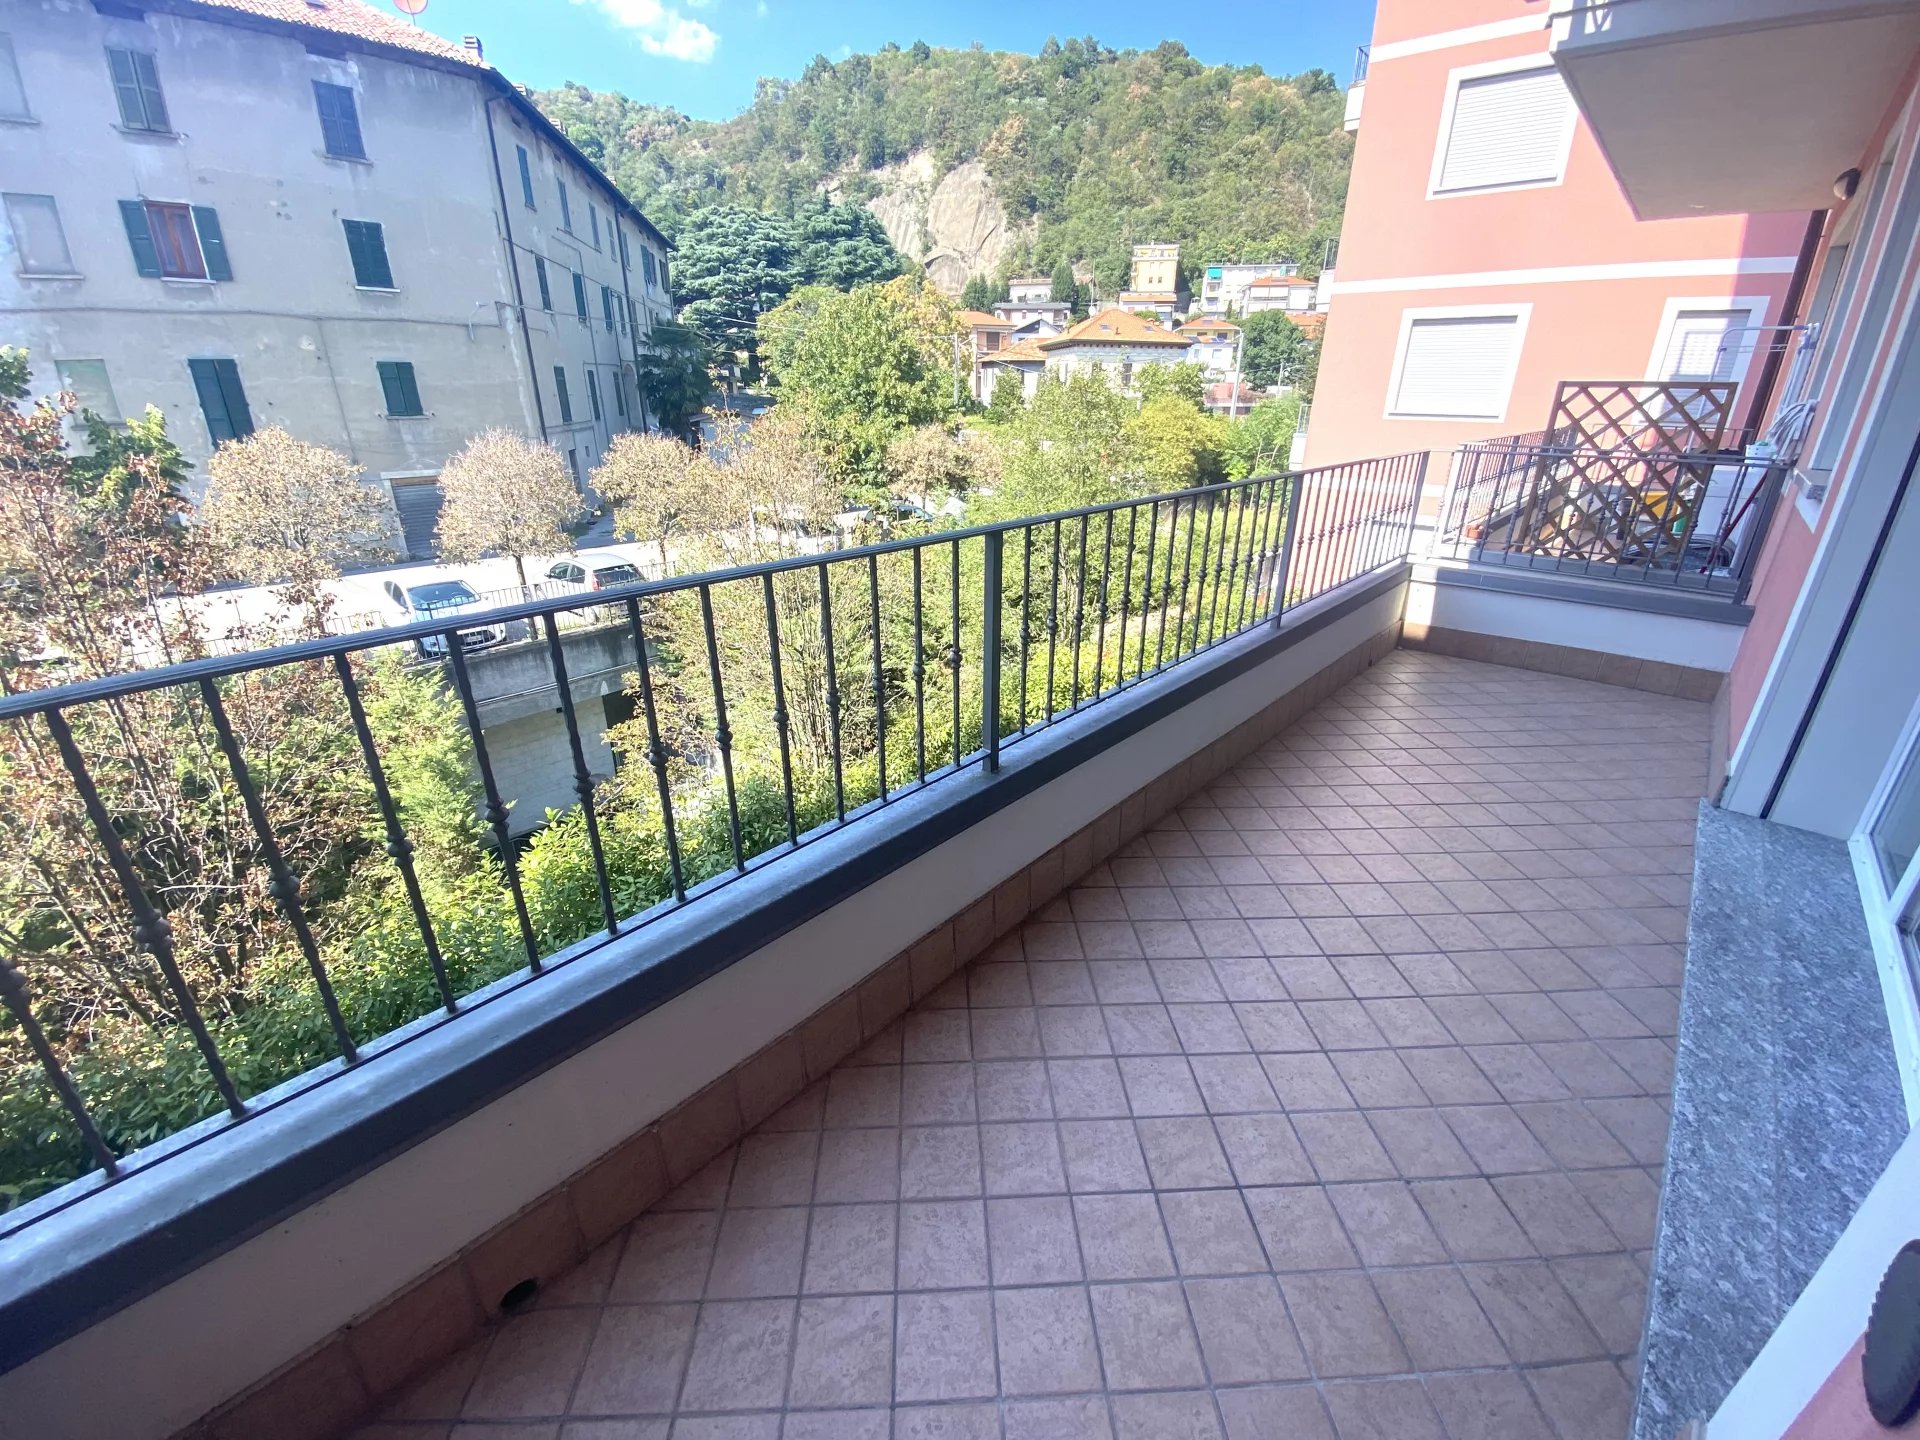 Sale Apartment - Como - Italy